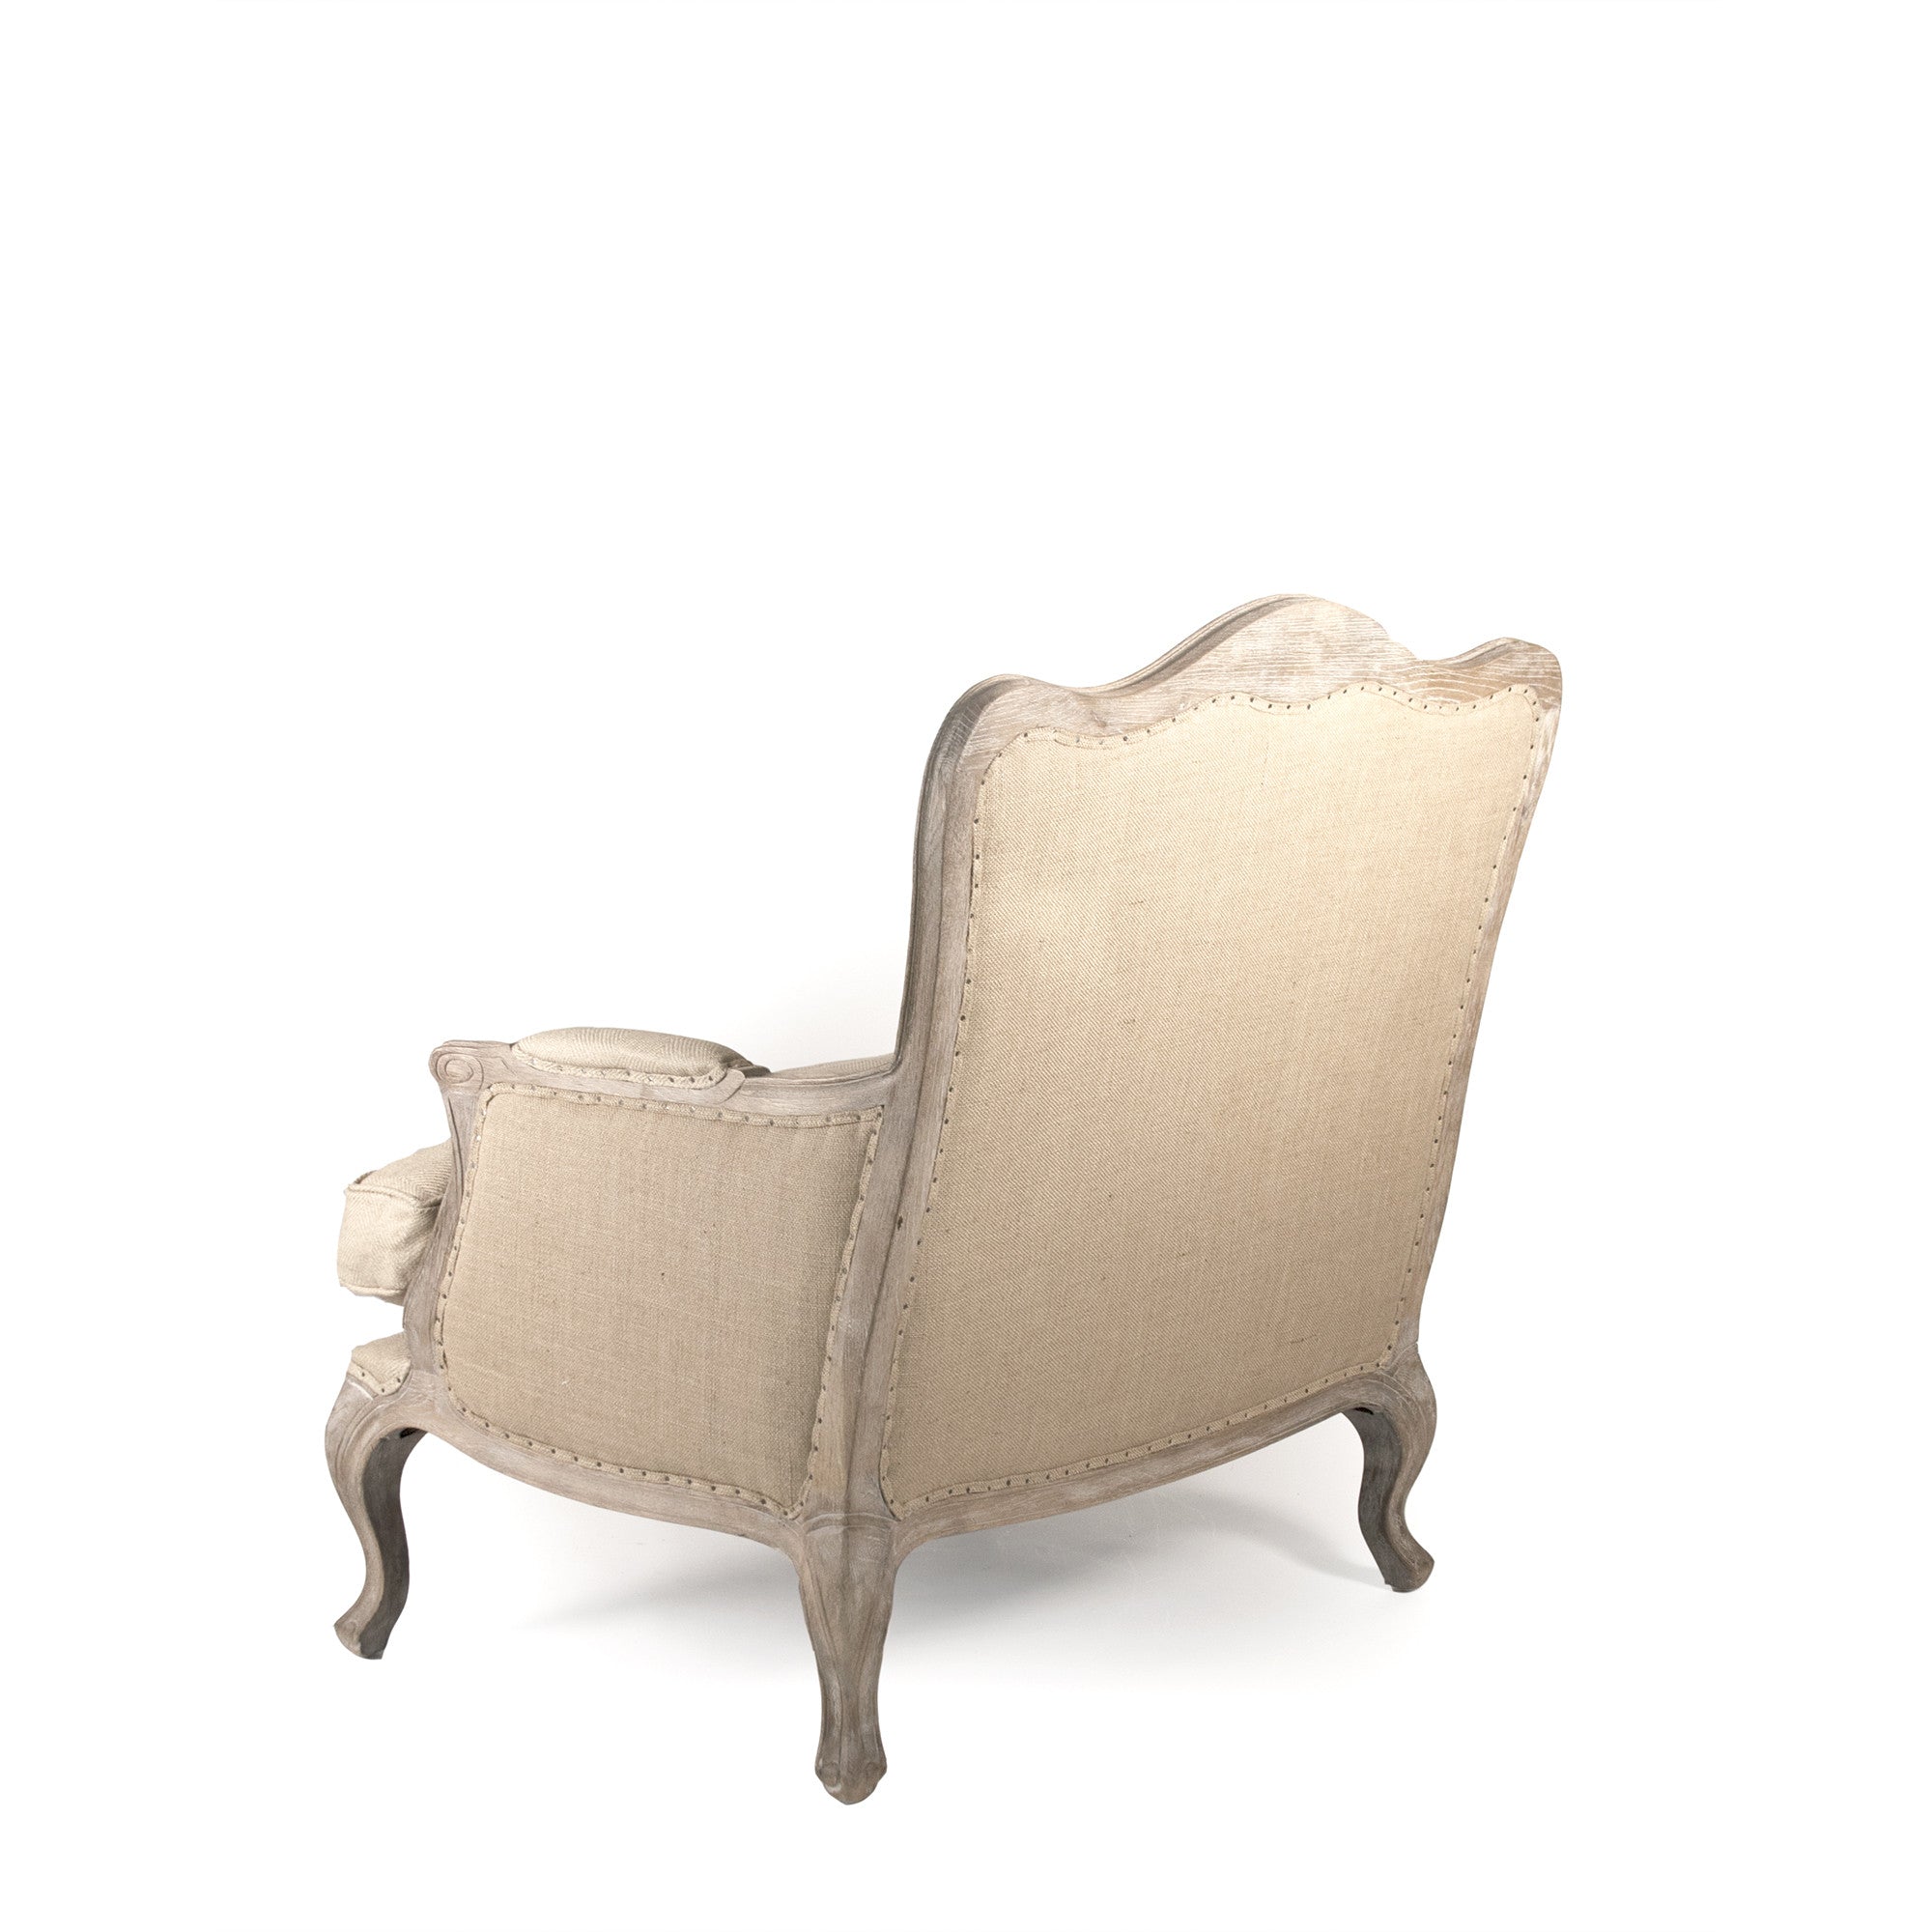 Ottoman - Belmont Club Chair